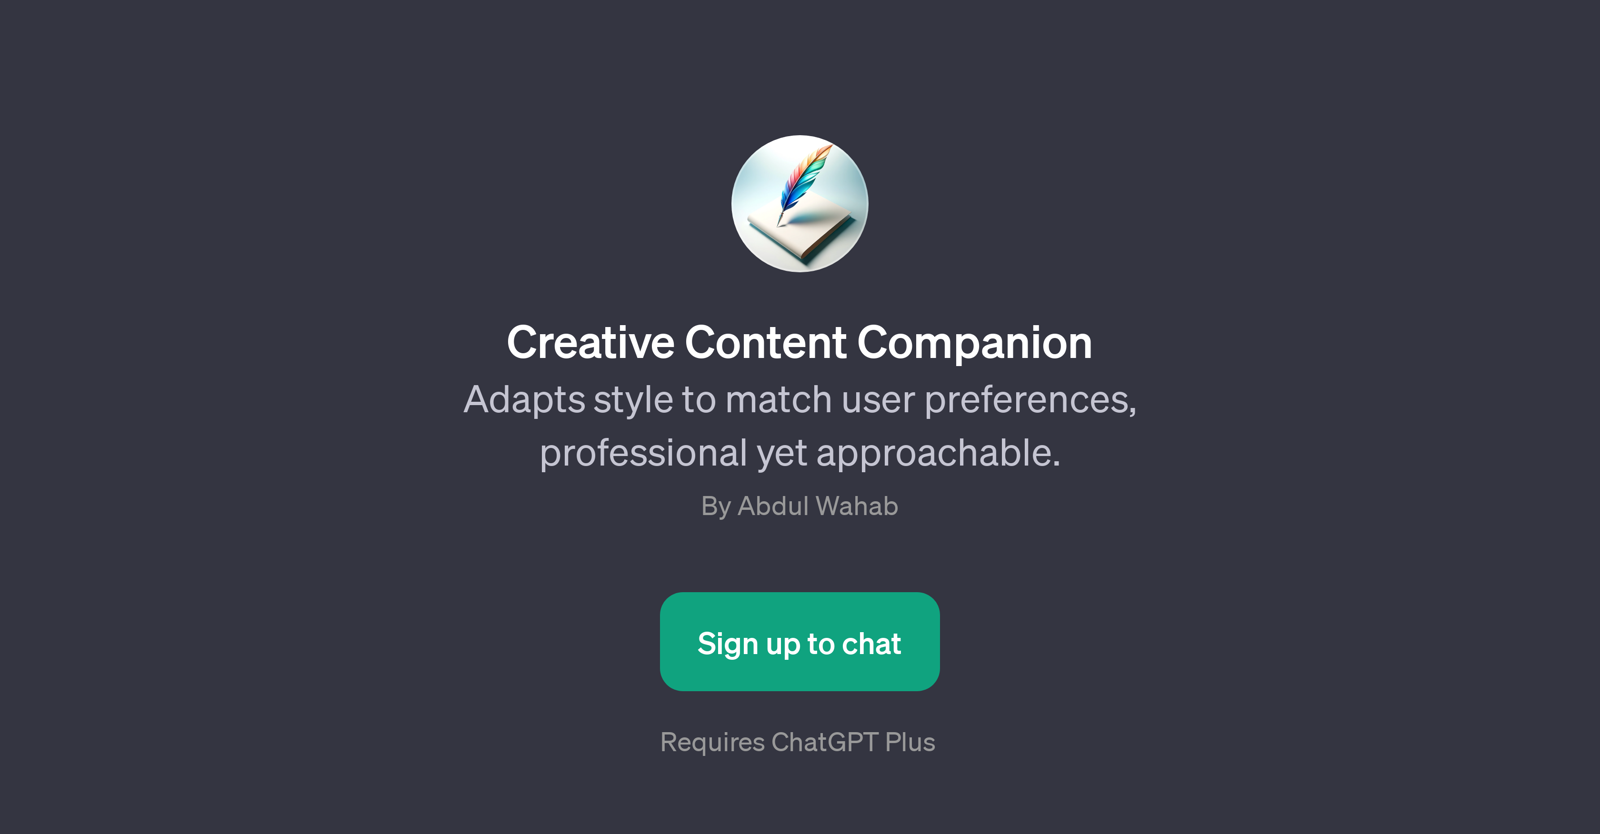 Creative Content Companion website